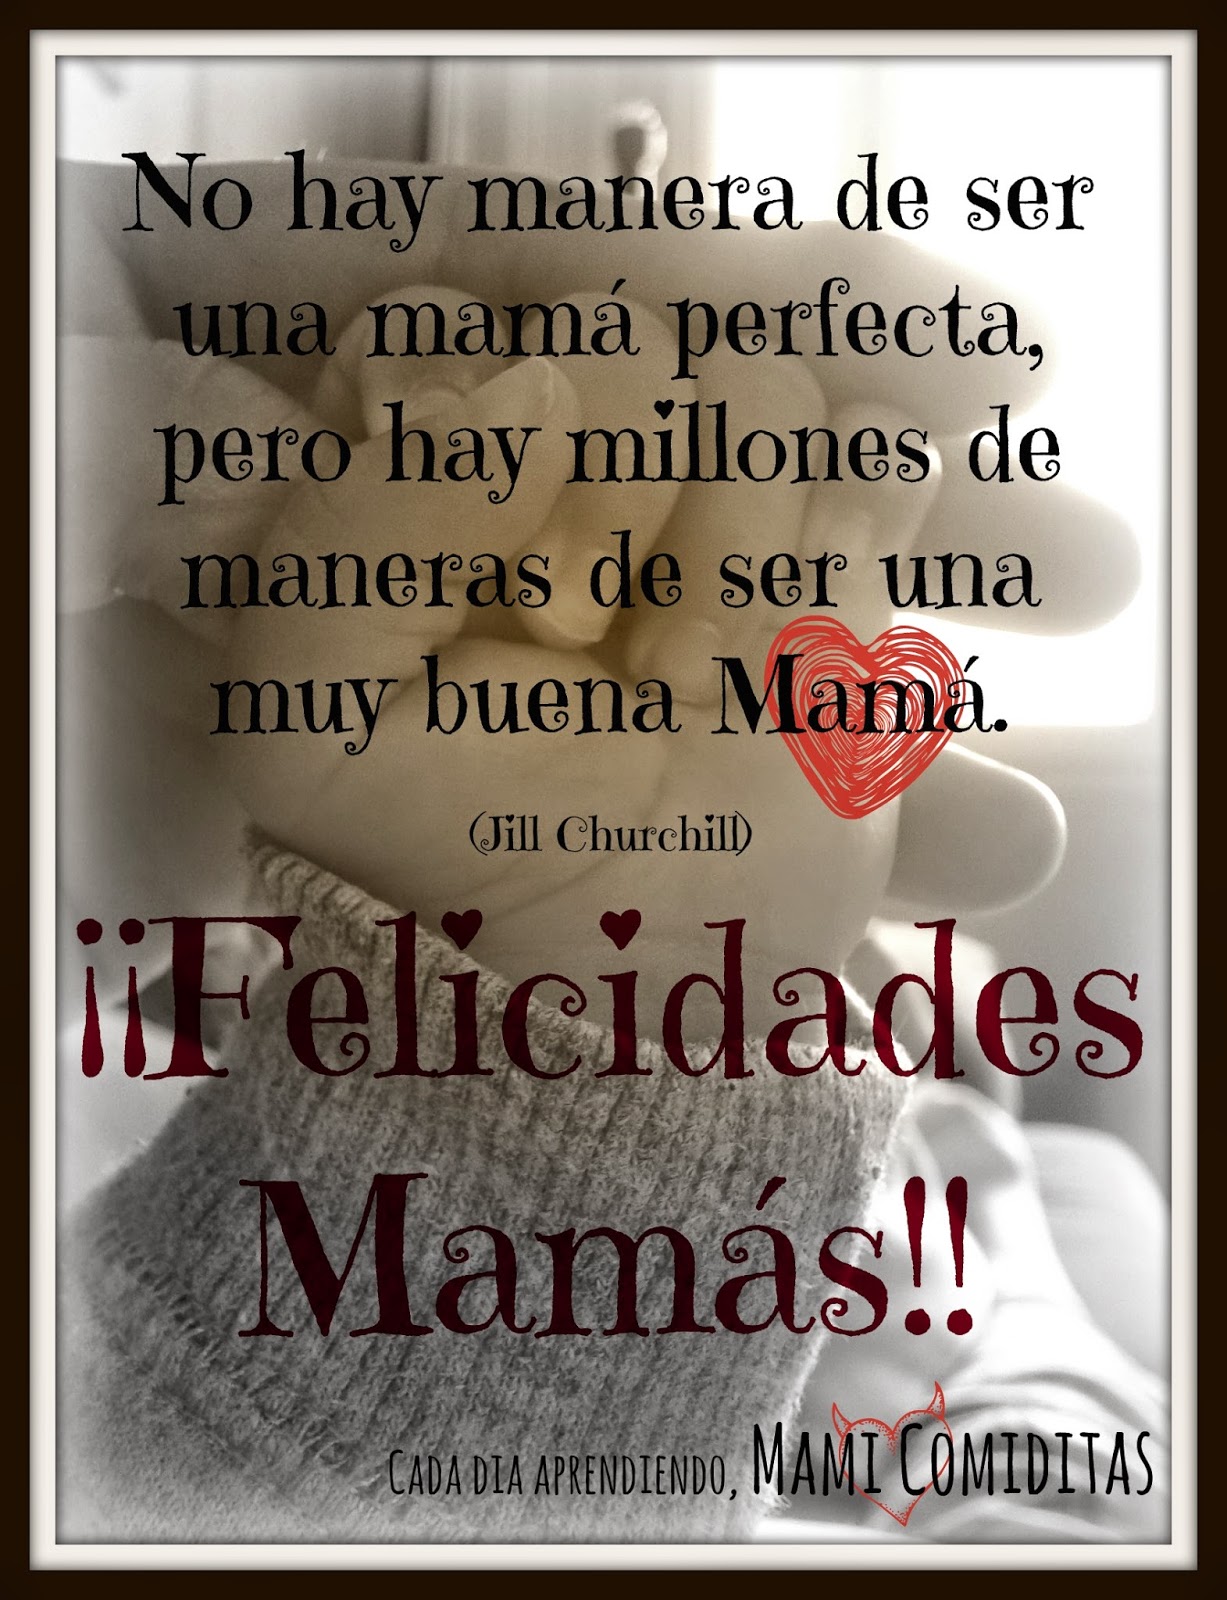 Mami Comiditas: Felicidades Mamas!!!!